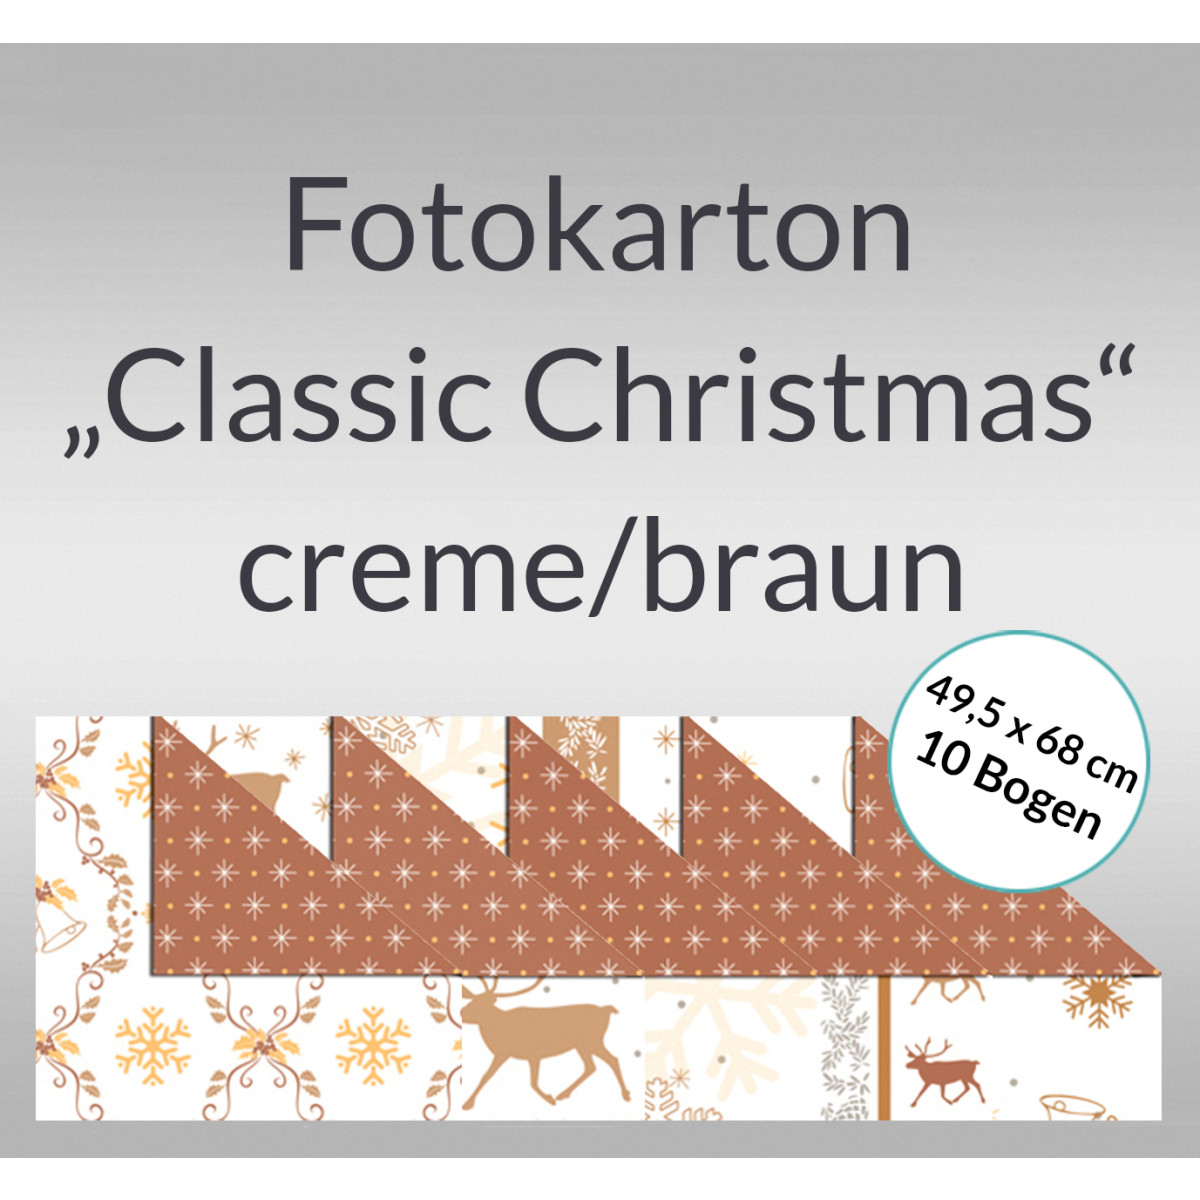 Fotokarton "Classic Christmas" creme/braun 49,5 x 68 cm - 10 Bogen